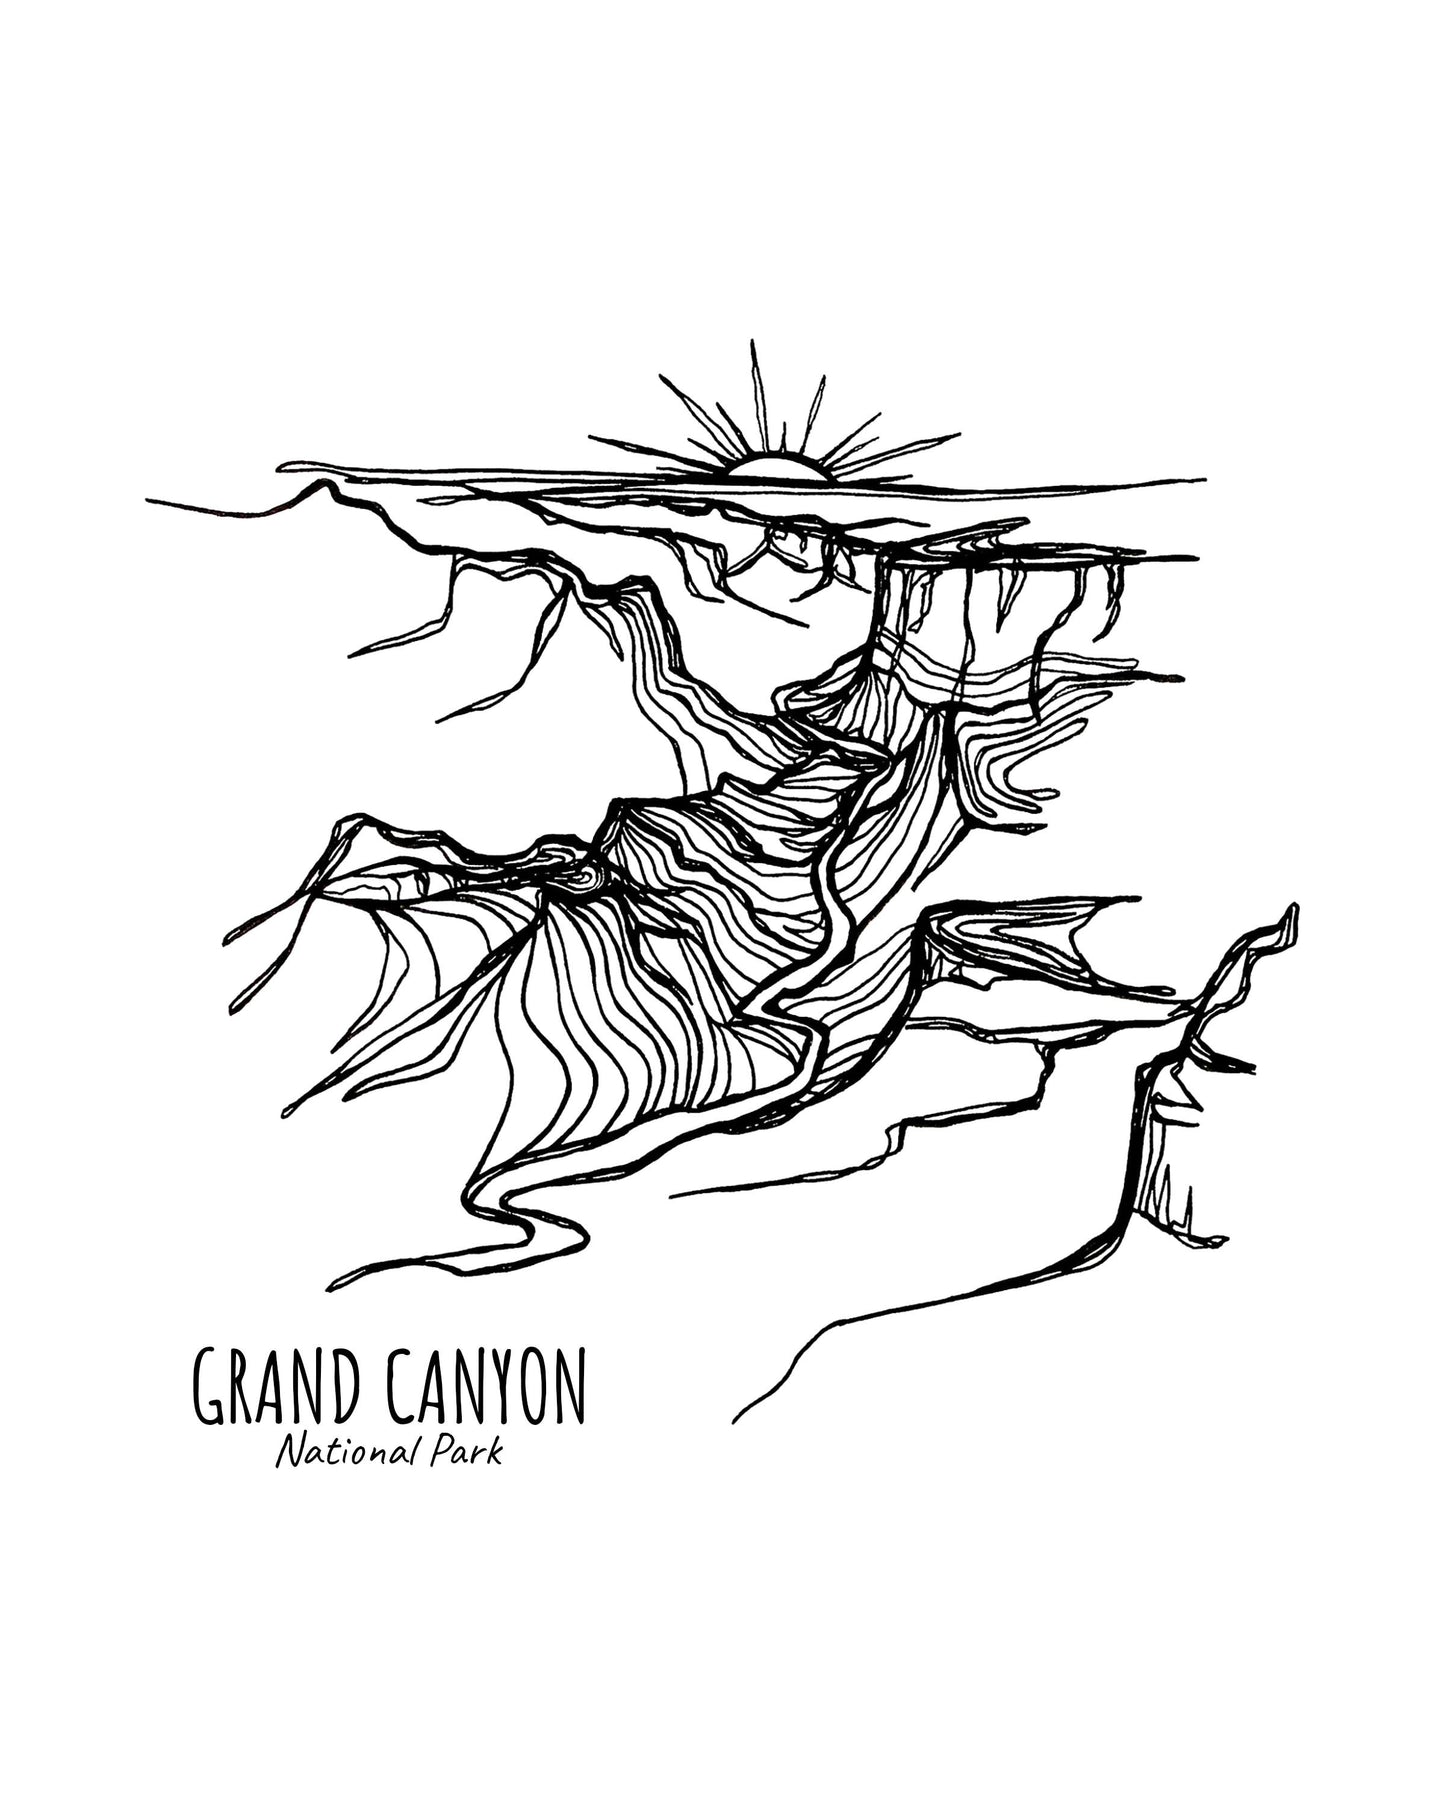 Grand Canyon National Park, Arizona Continuous Line Print